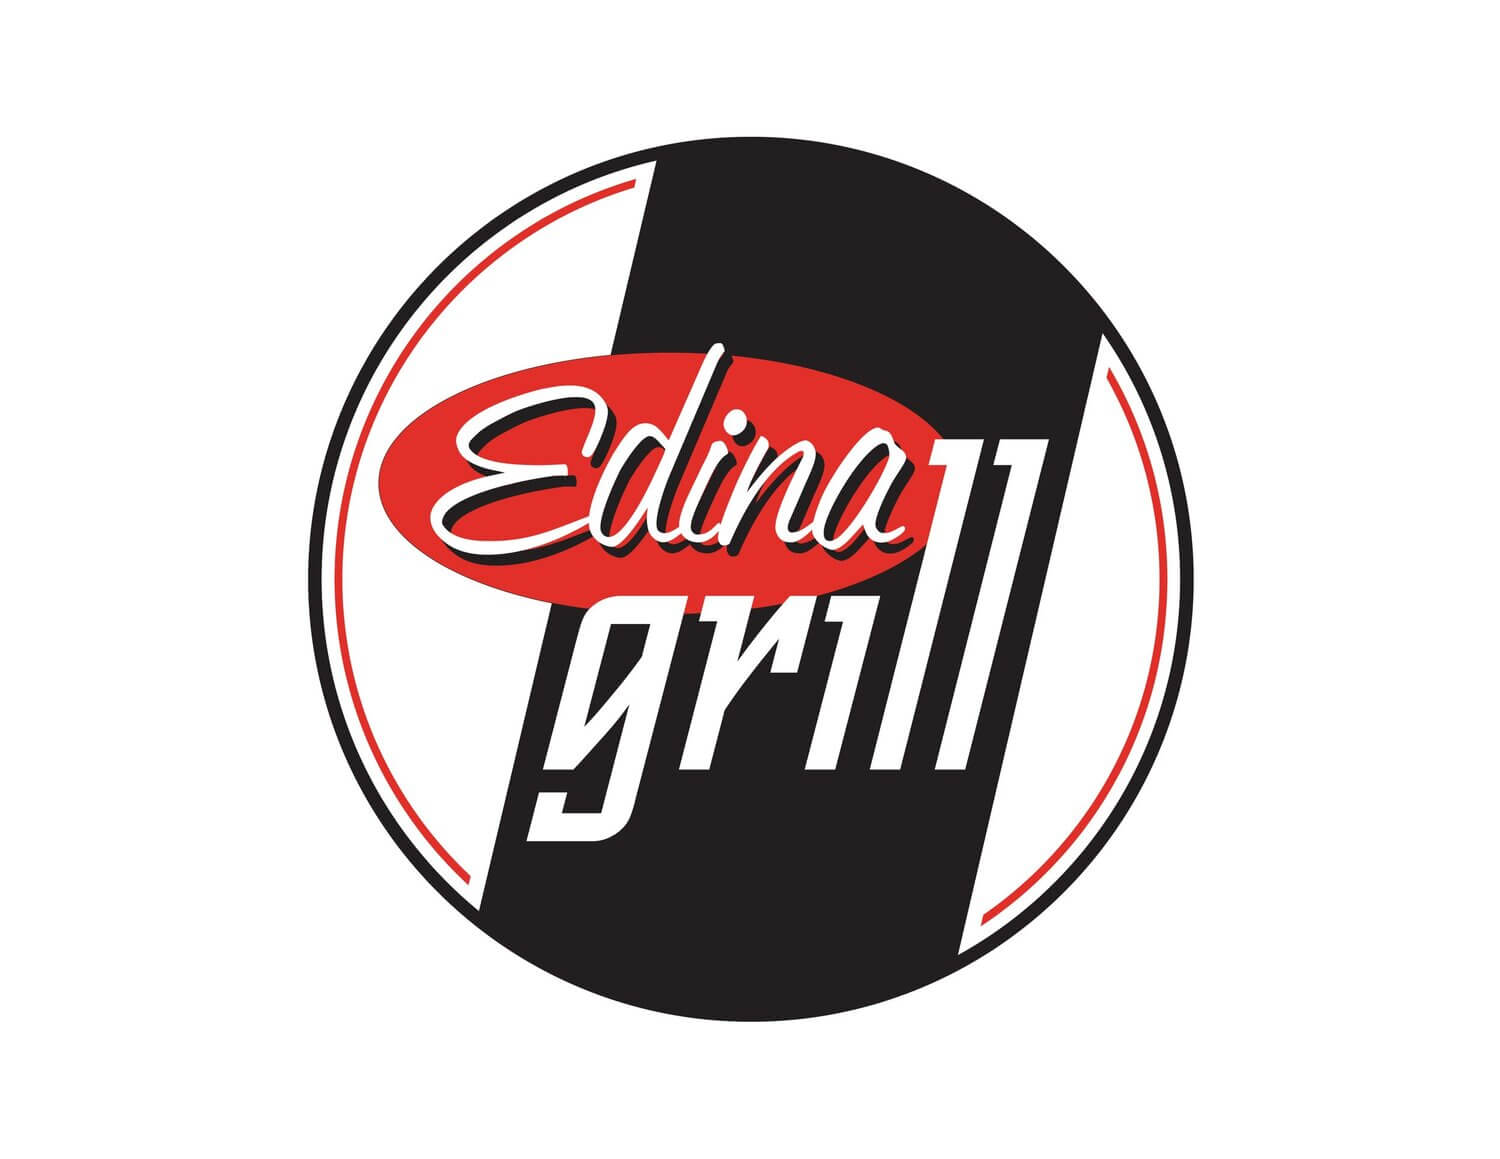 edinagrill_logo (2)